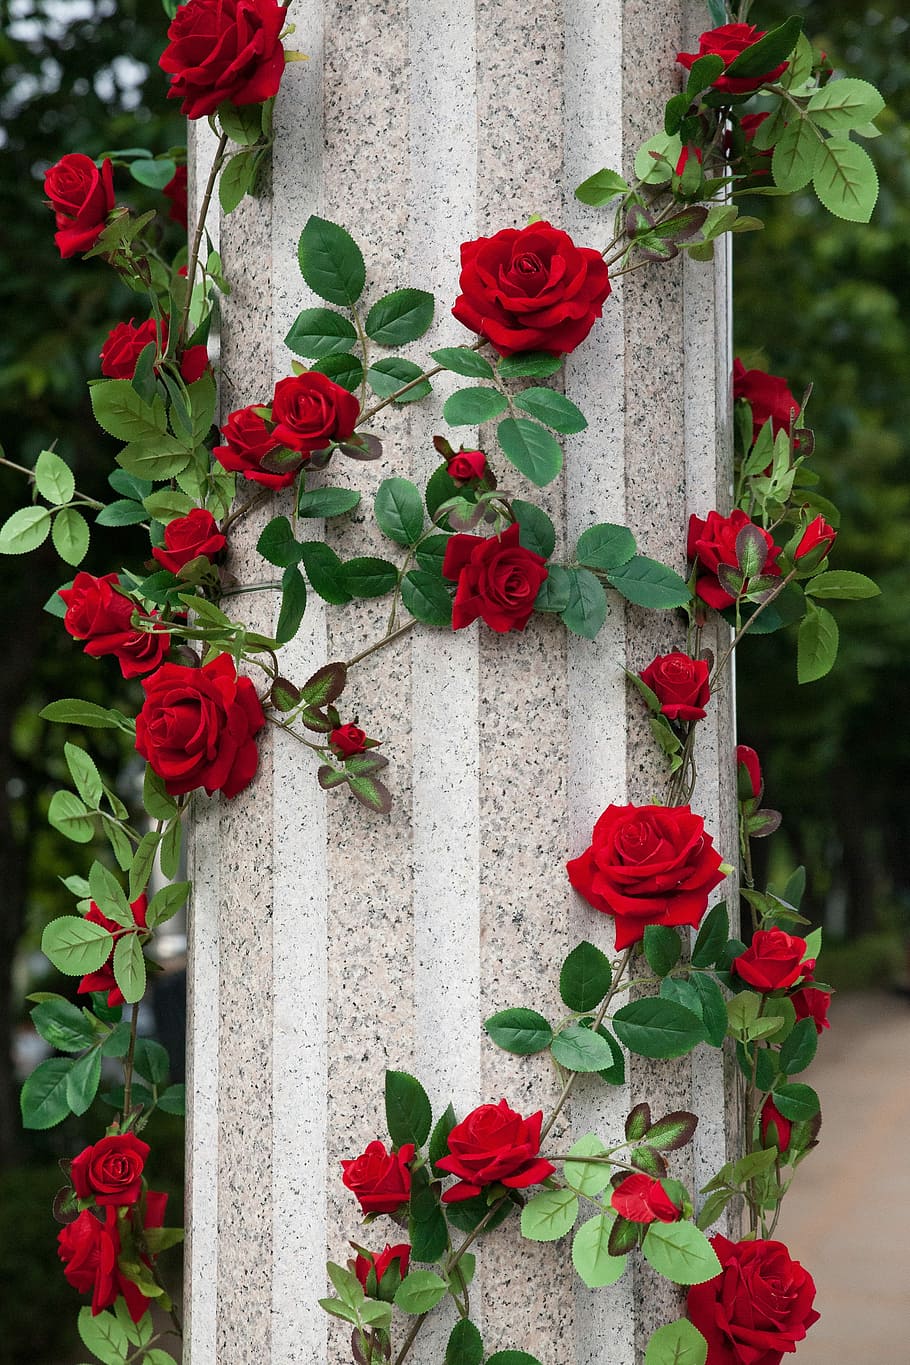 red, roses, around, white, concrete, pillar, rose, flowers, rose garden, nature